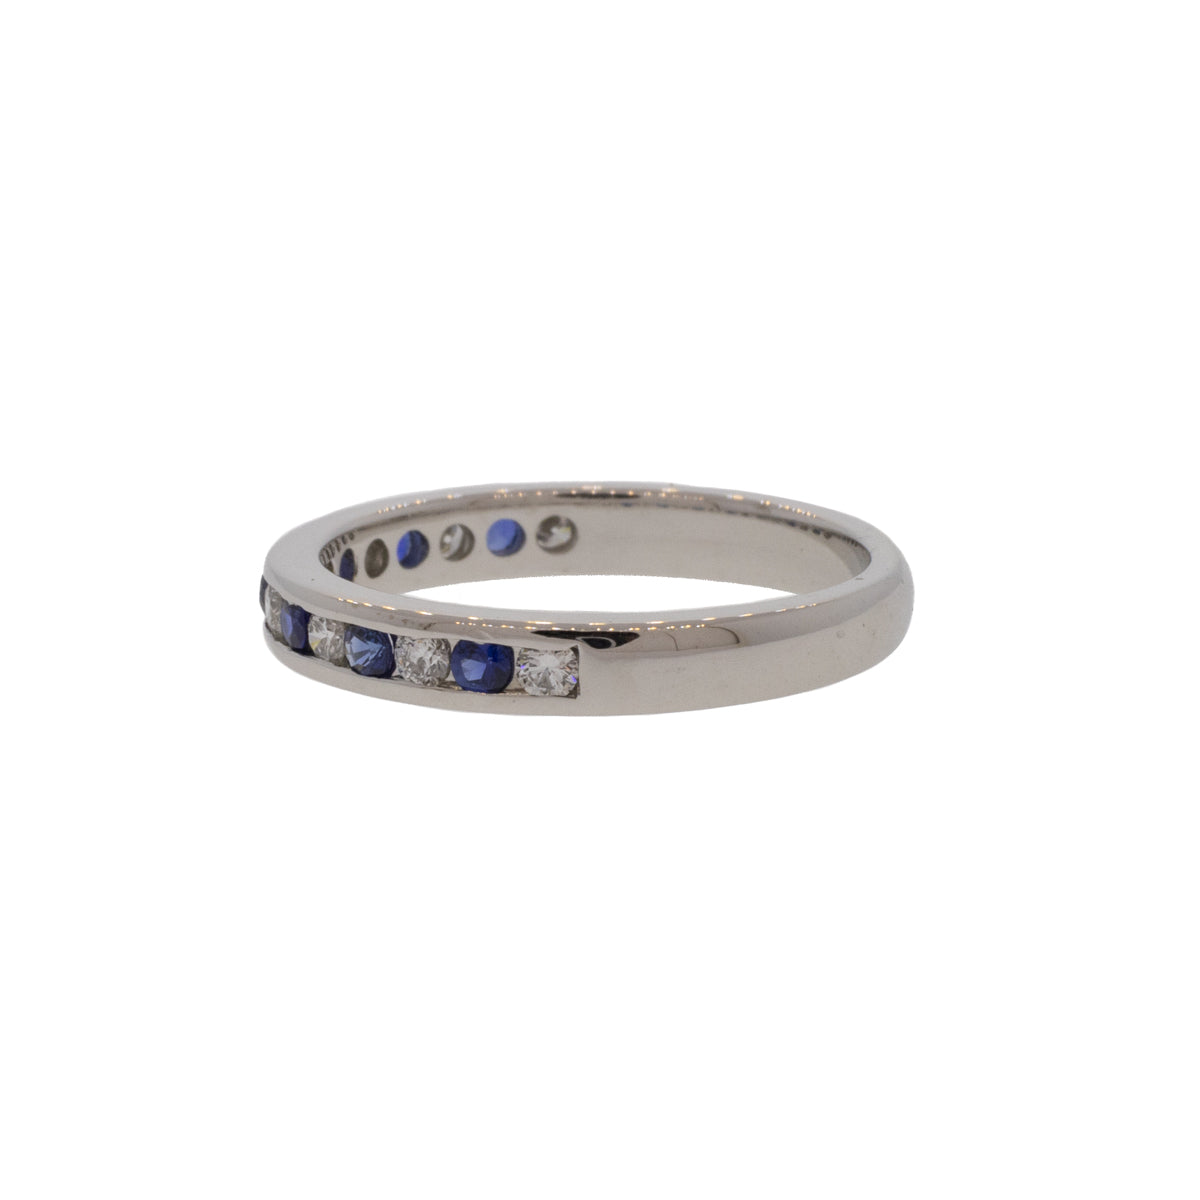 Channel Set Premium Blue Sapphire and Diamond Ring